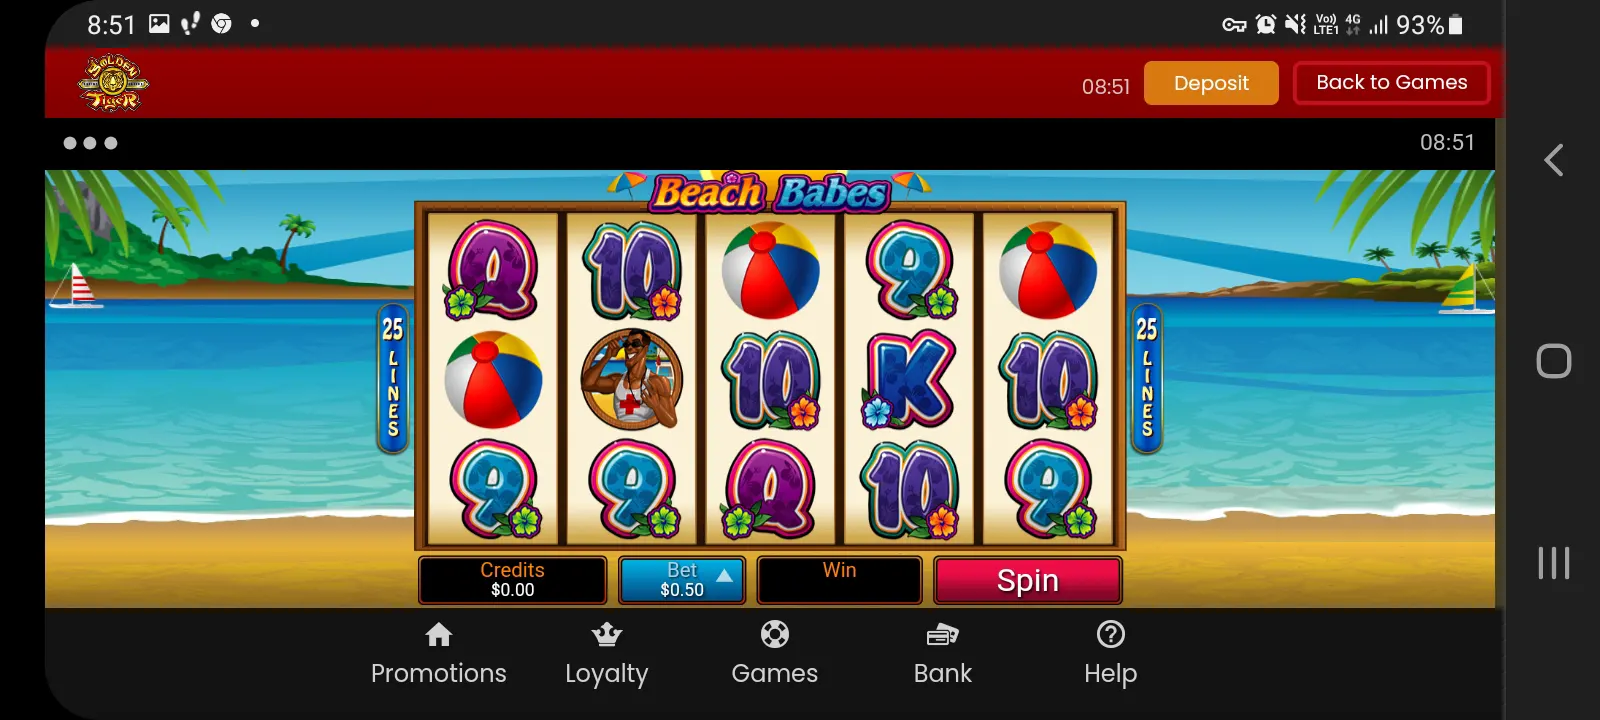 Golden Tiger casino app screenshot 2